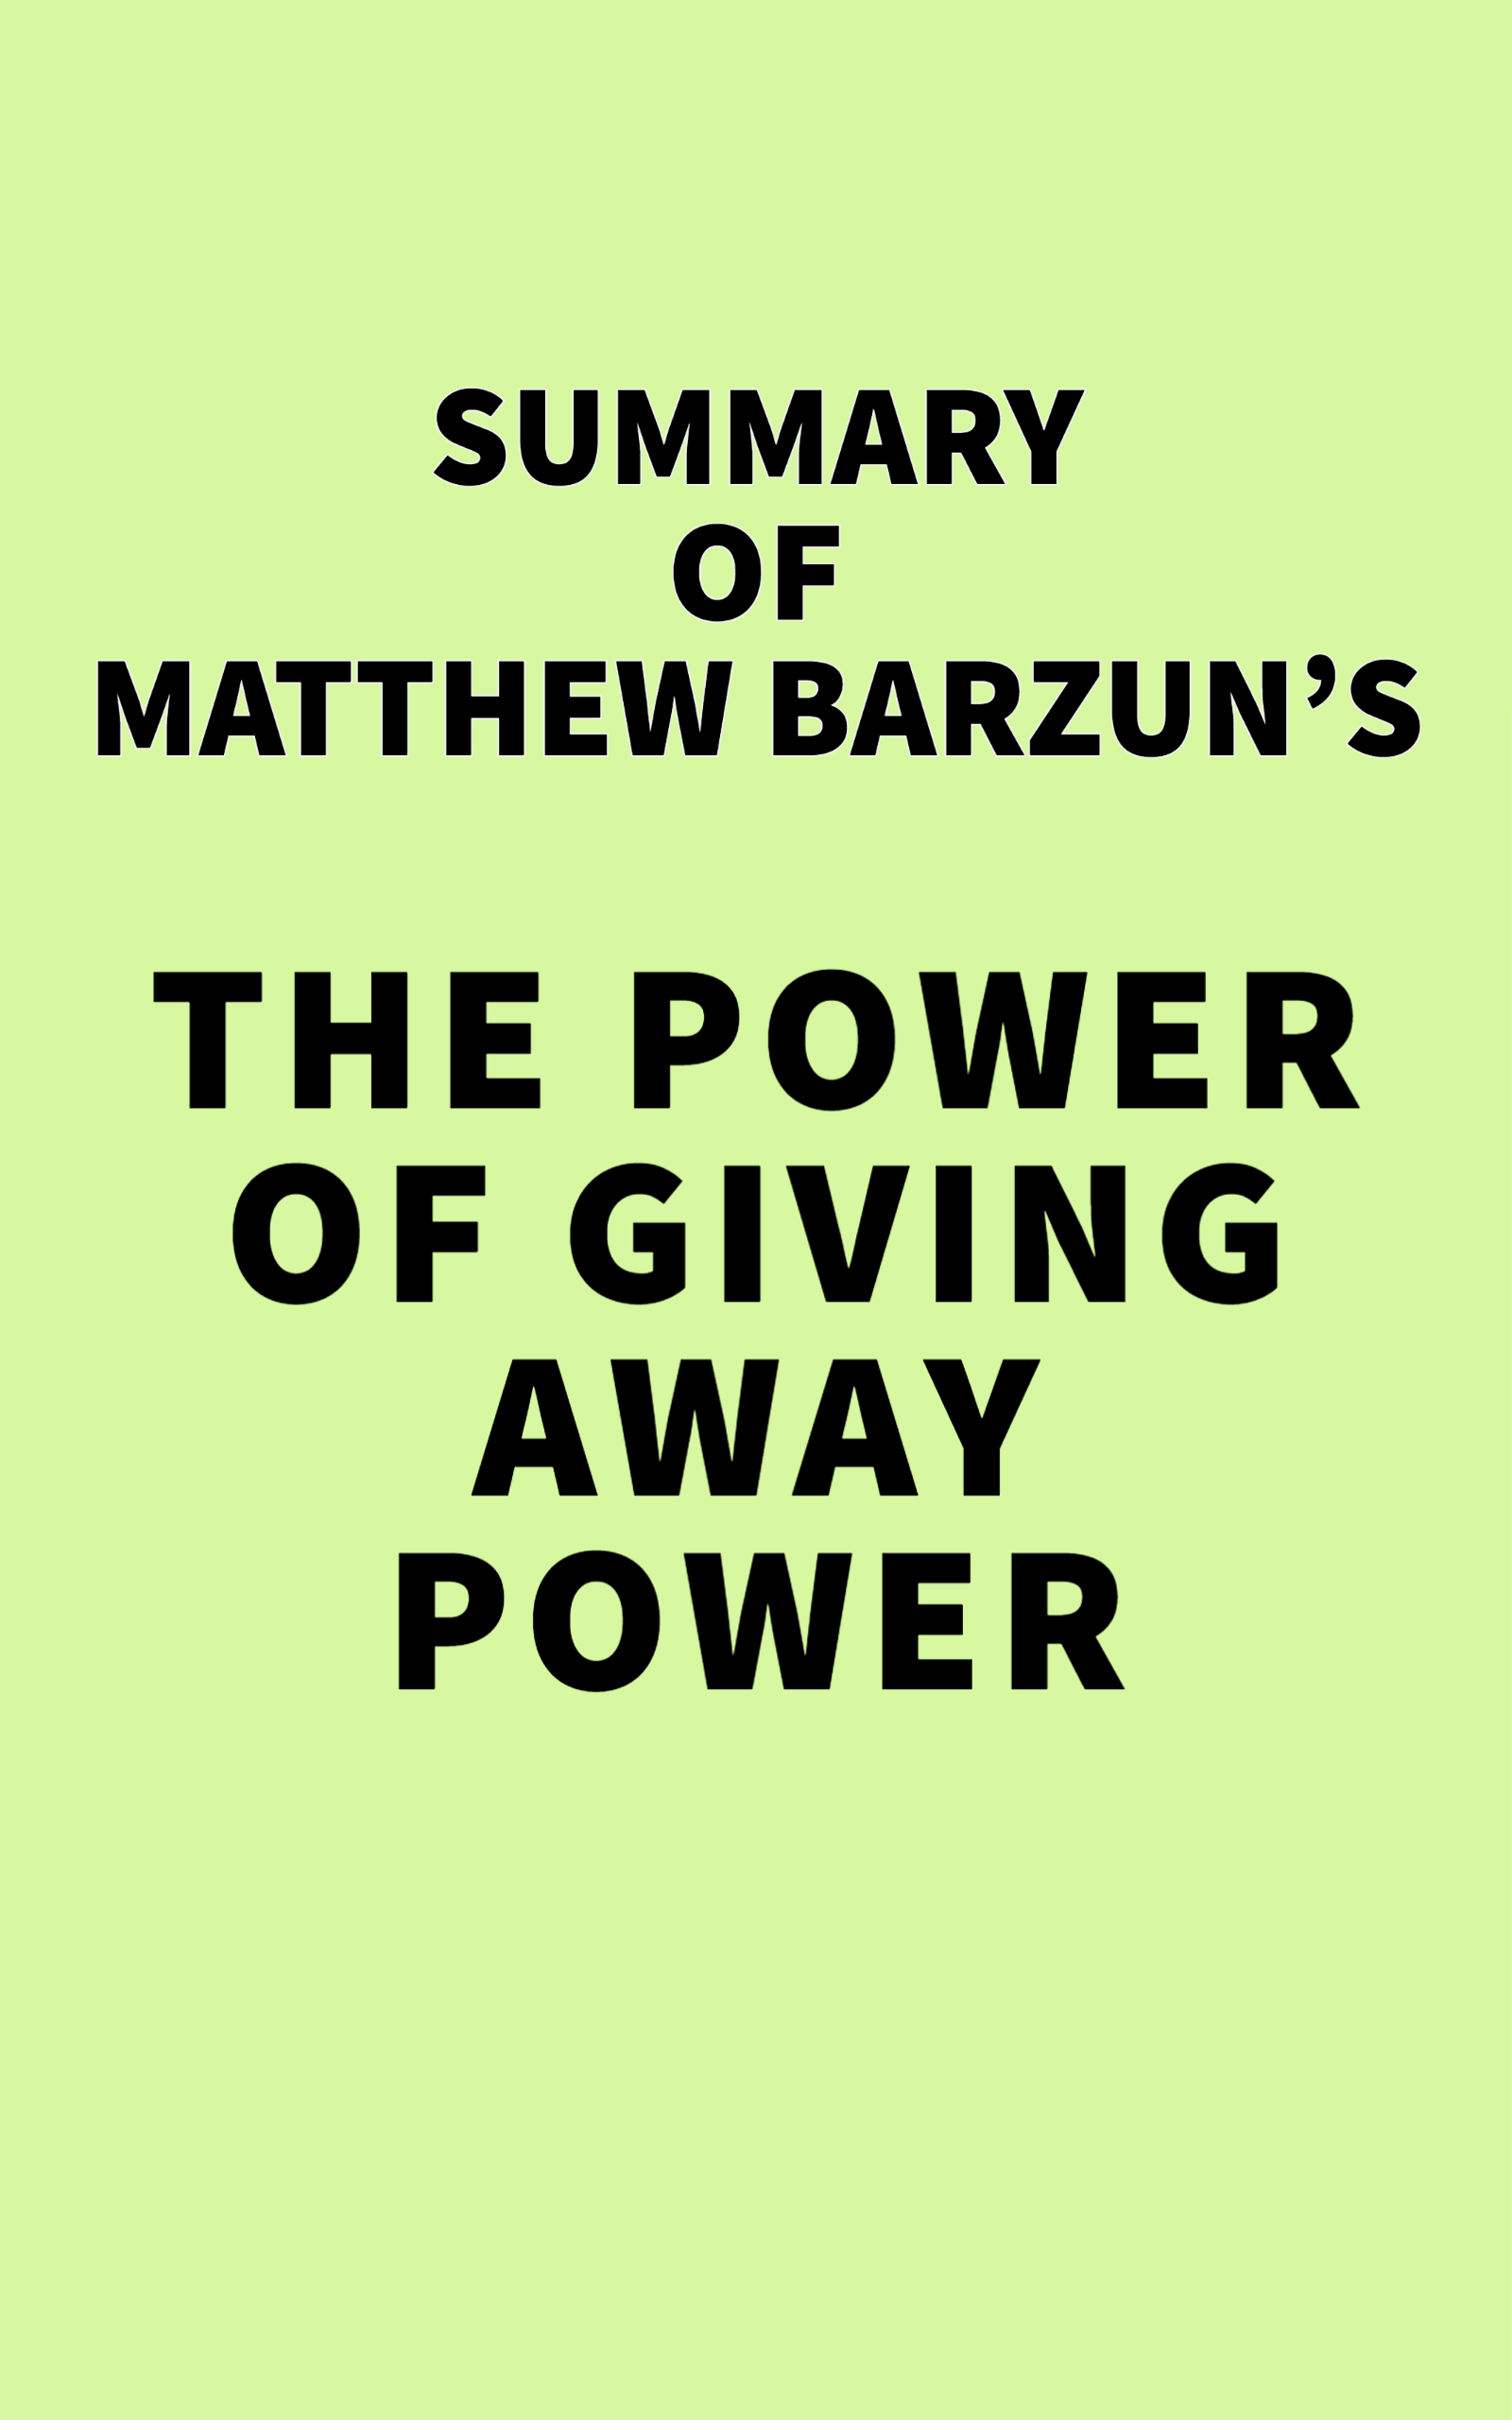 Summary of Matthew Barzun's The Power of Giving Away Power